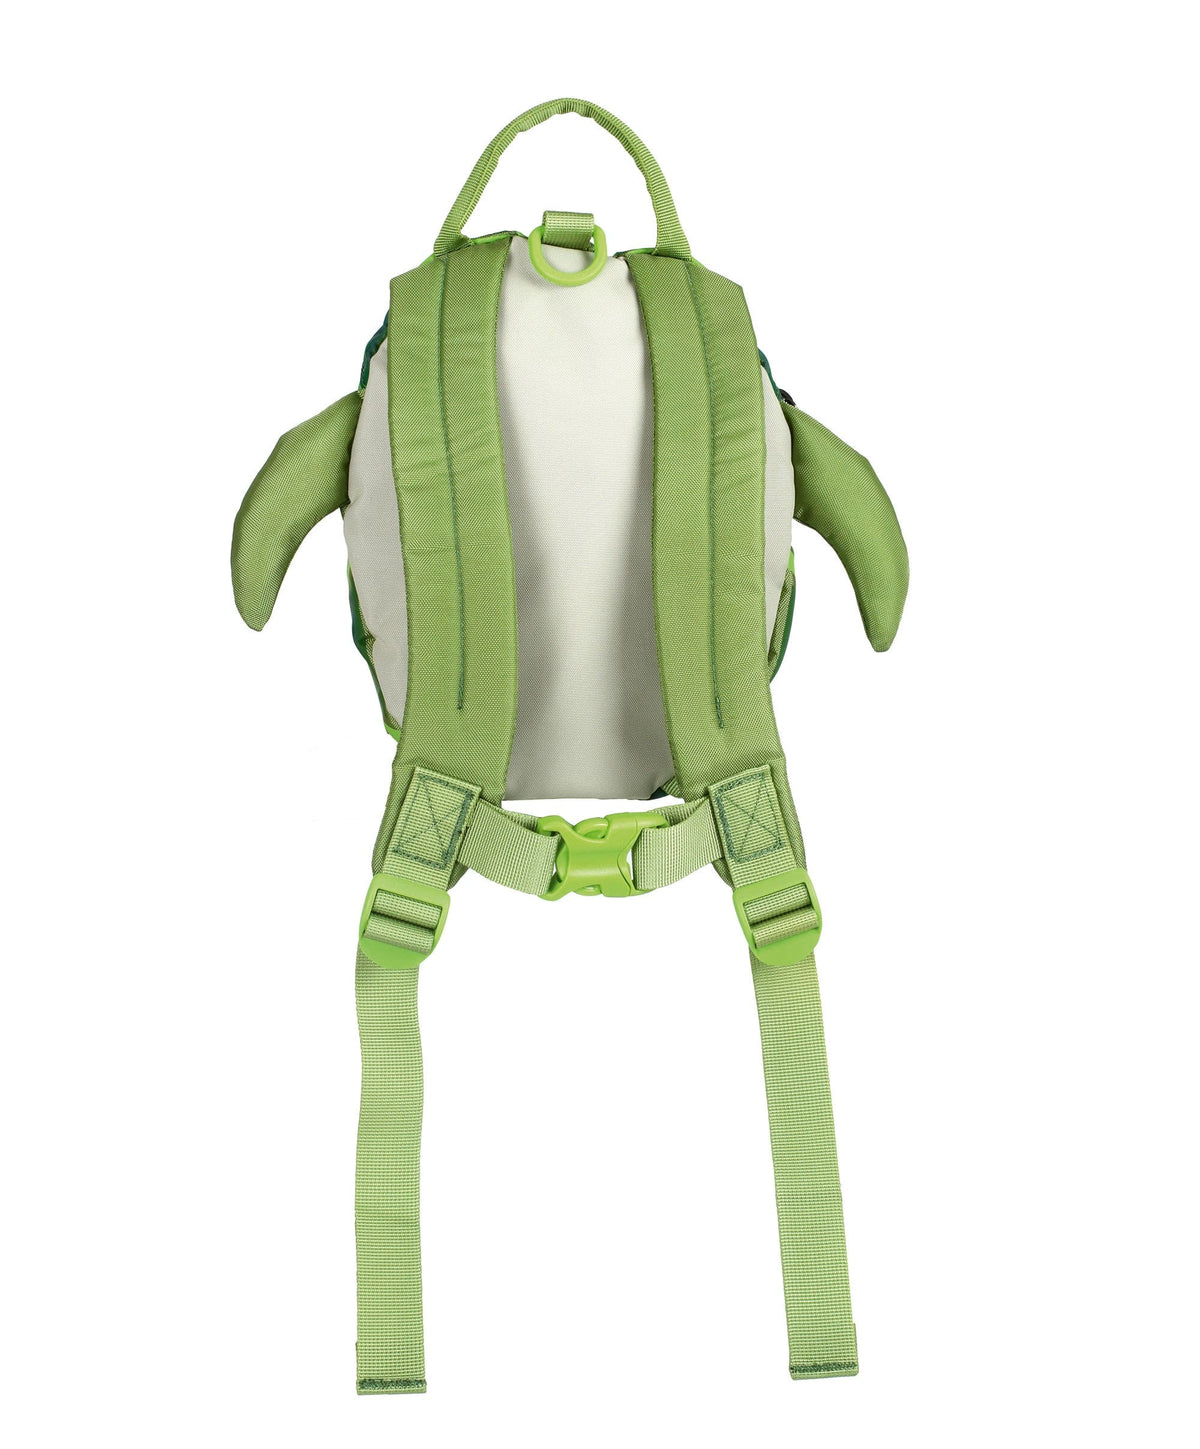 Little Girls Handbags Mini- Shoulder Bag with Mini Flap Bag Wallet Bag  Crossbody Bag for Girls Kids Toddler Age 2-5 Years Old Best Gifts | Fruugo  NO